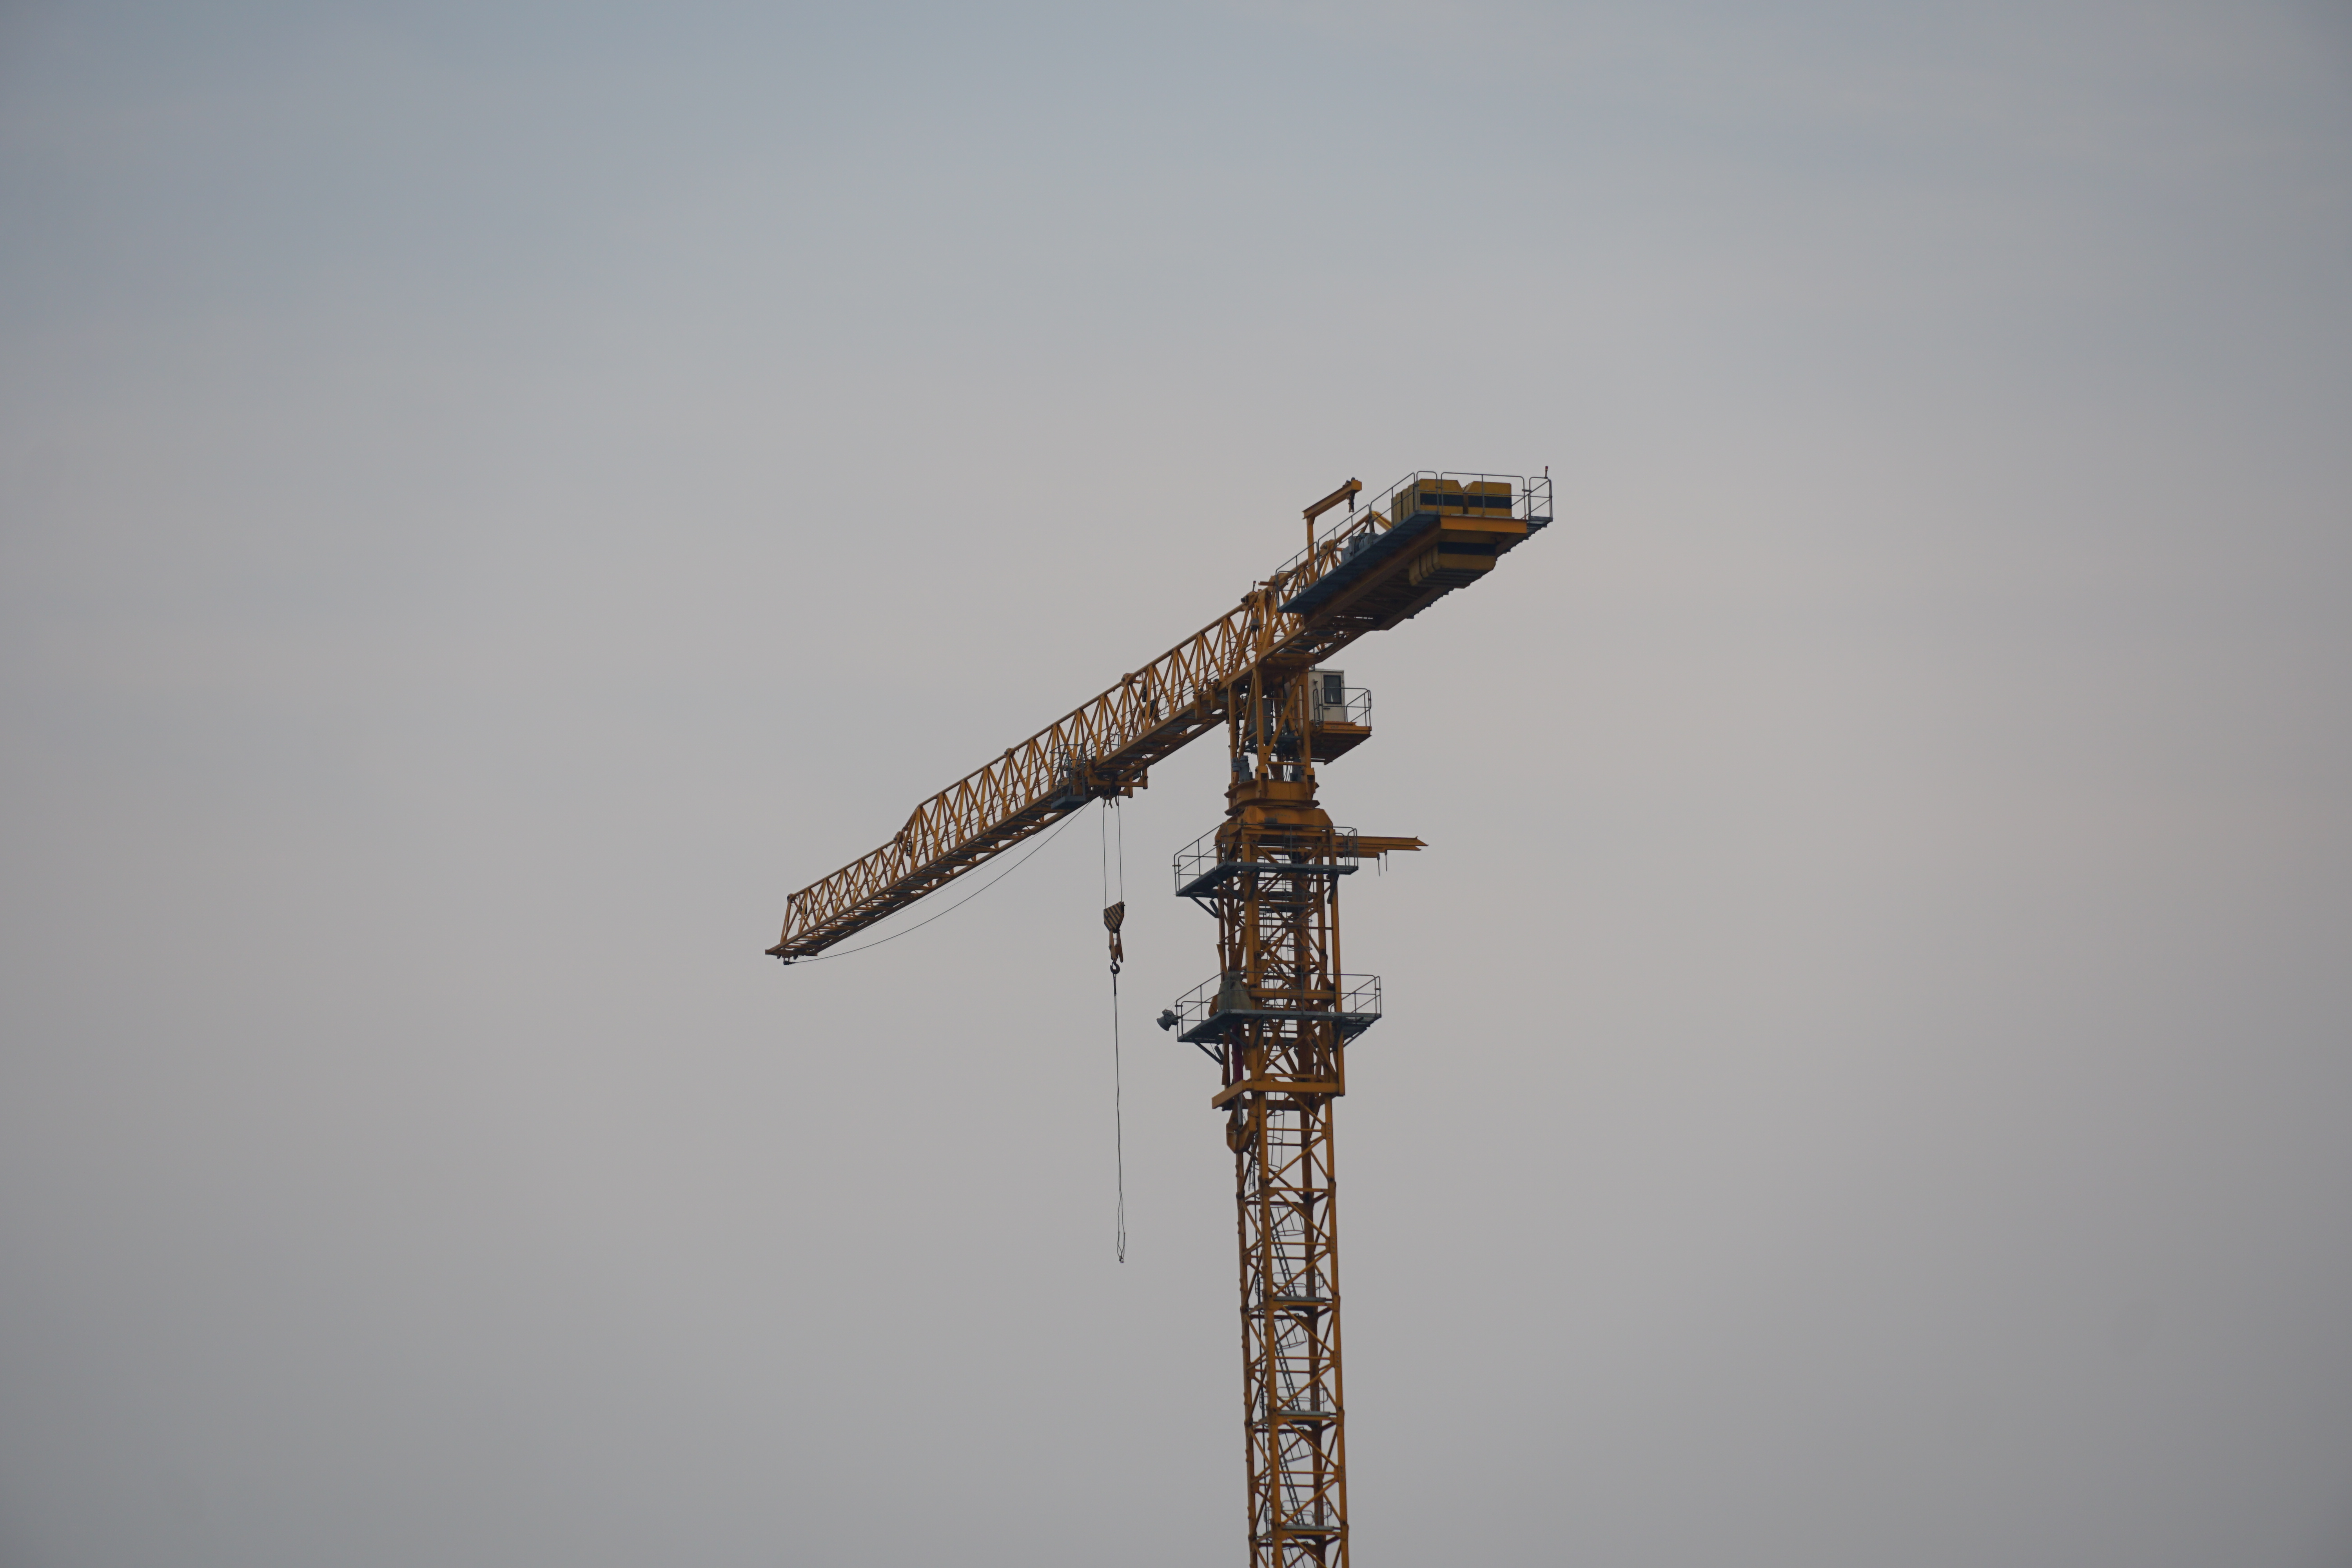 General 6000x4000 cranes (machine) sky overcast outdoors construction